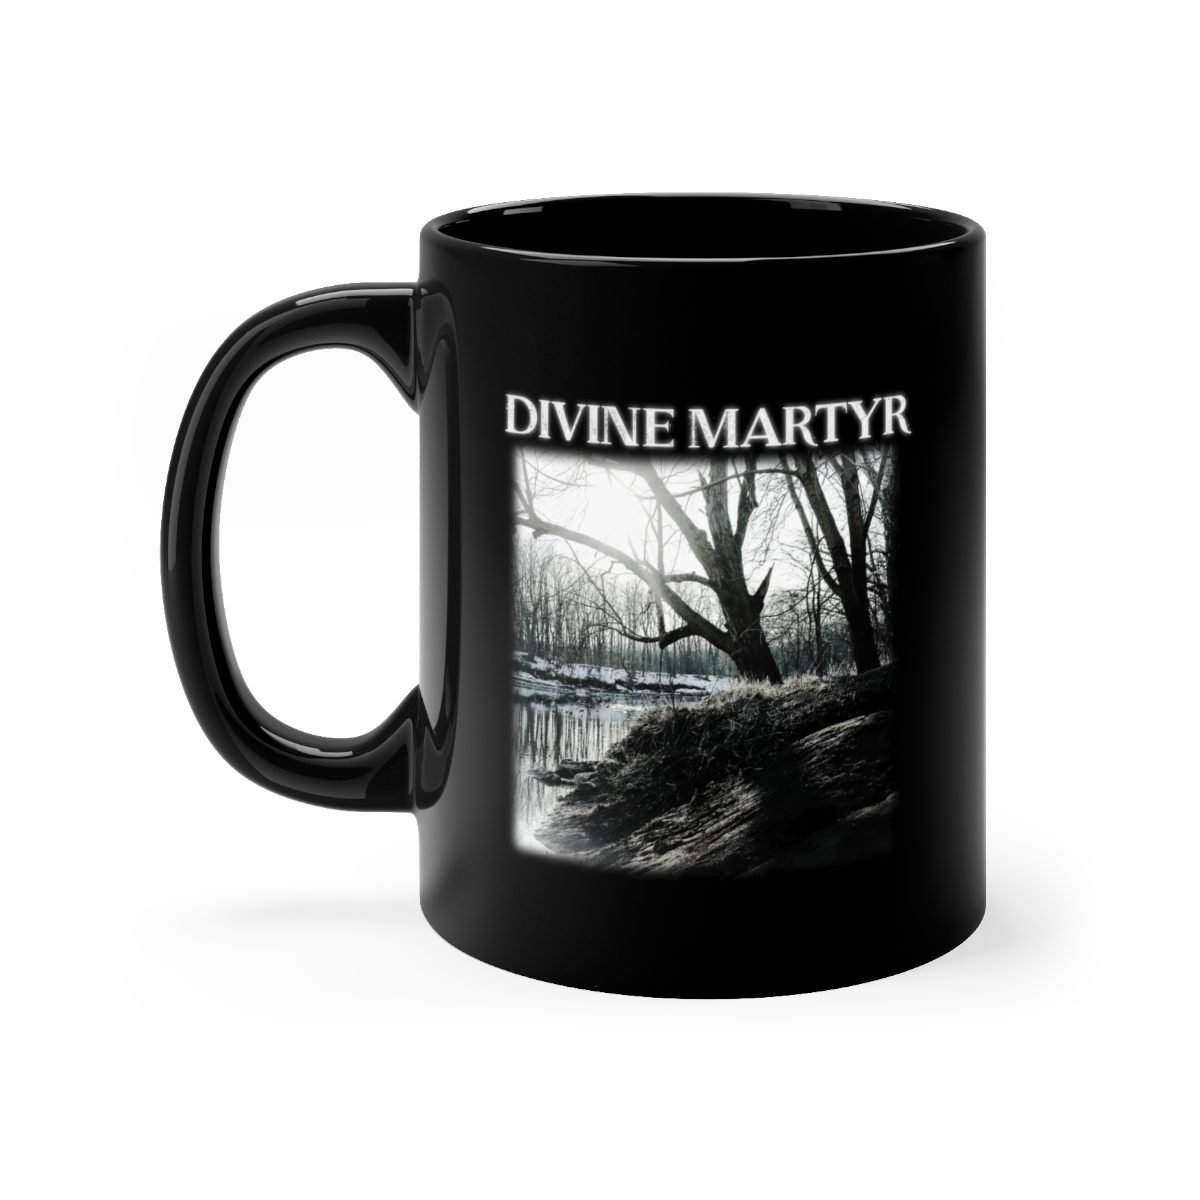 Divine Martyr – Mystique 11oz Black mug